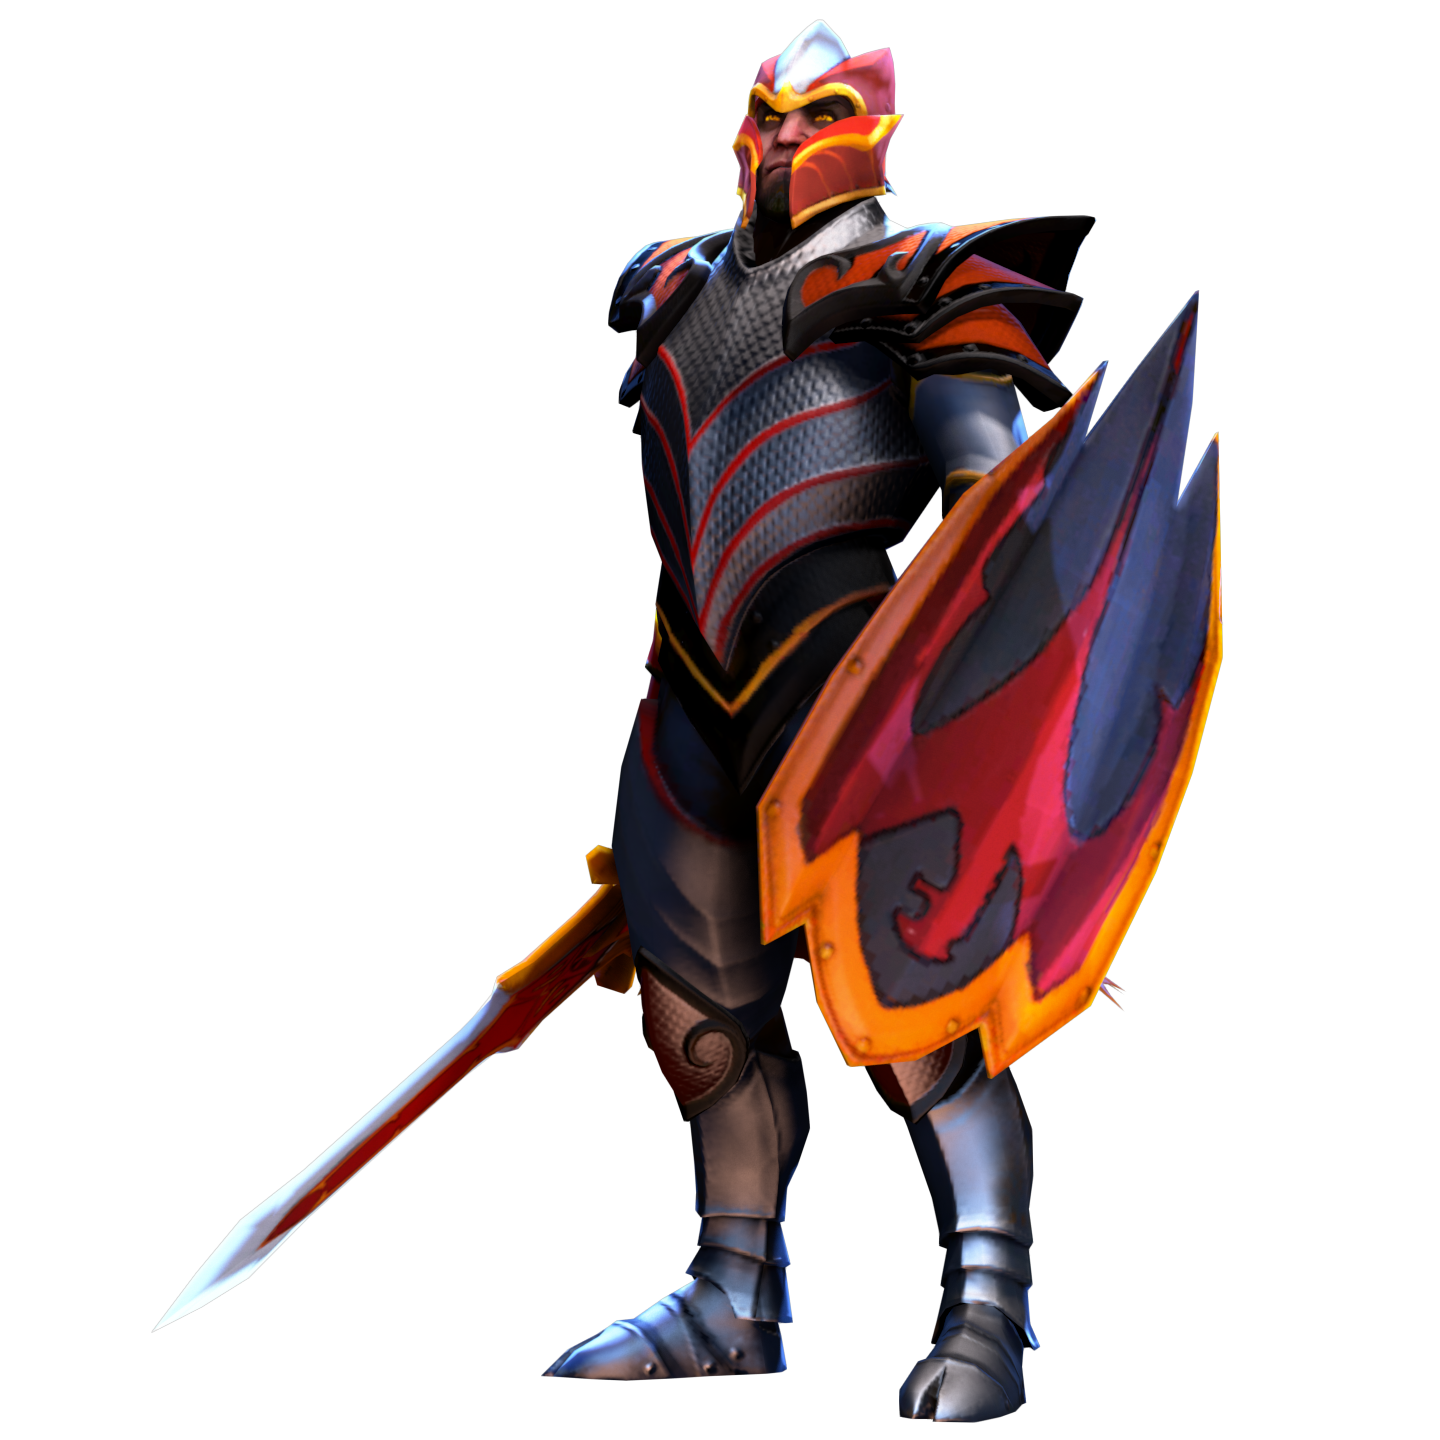 Davion dragon knight